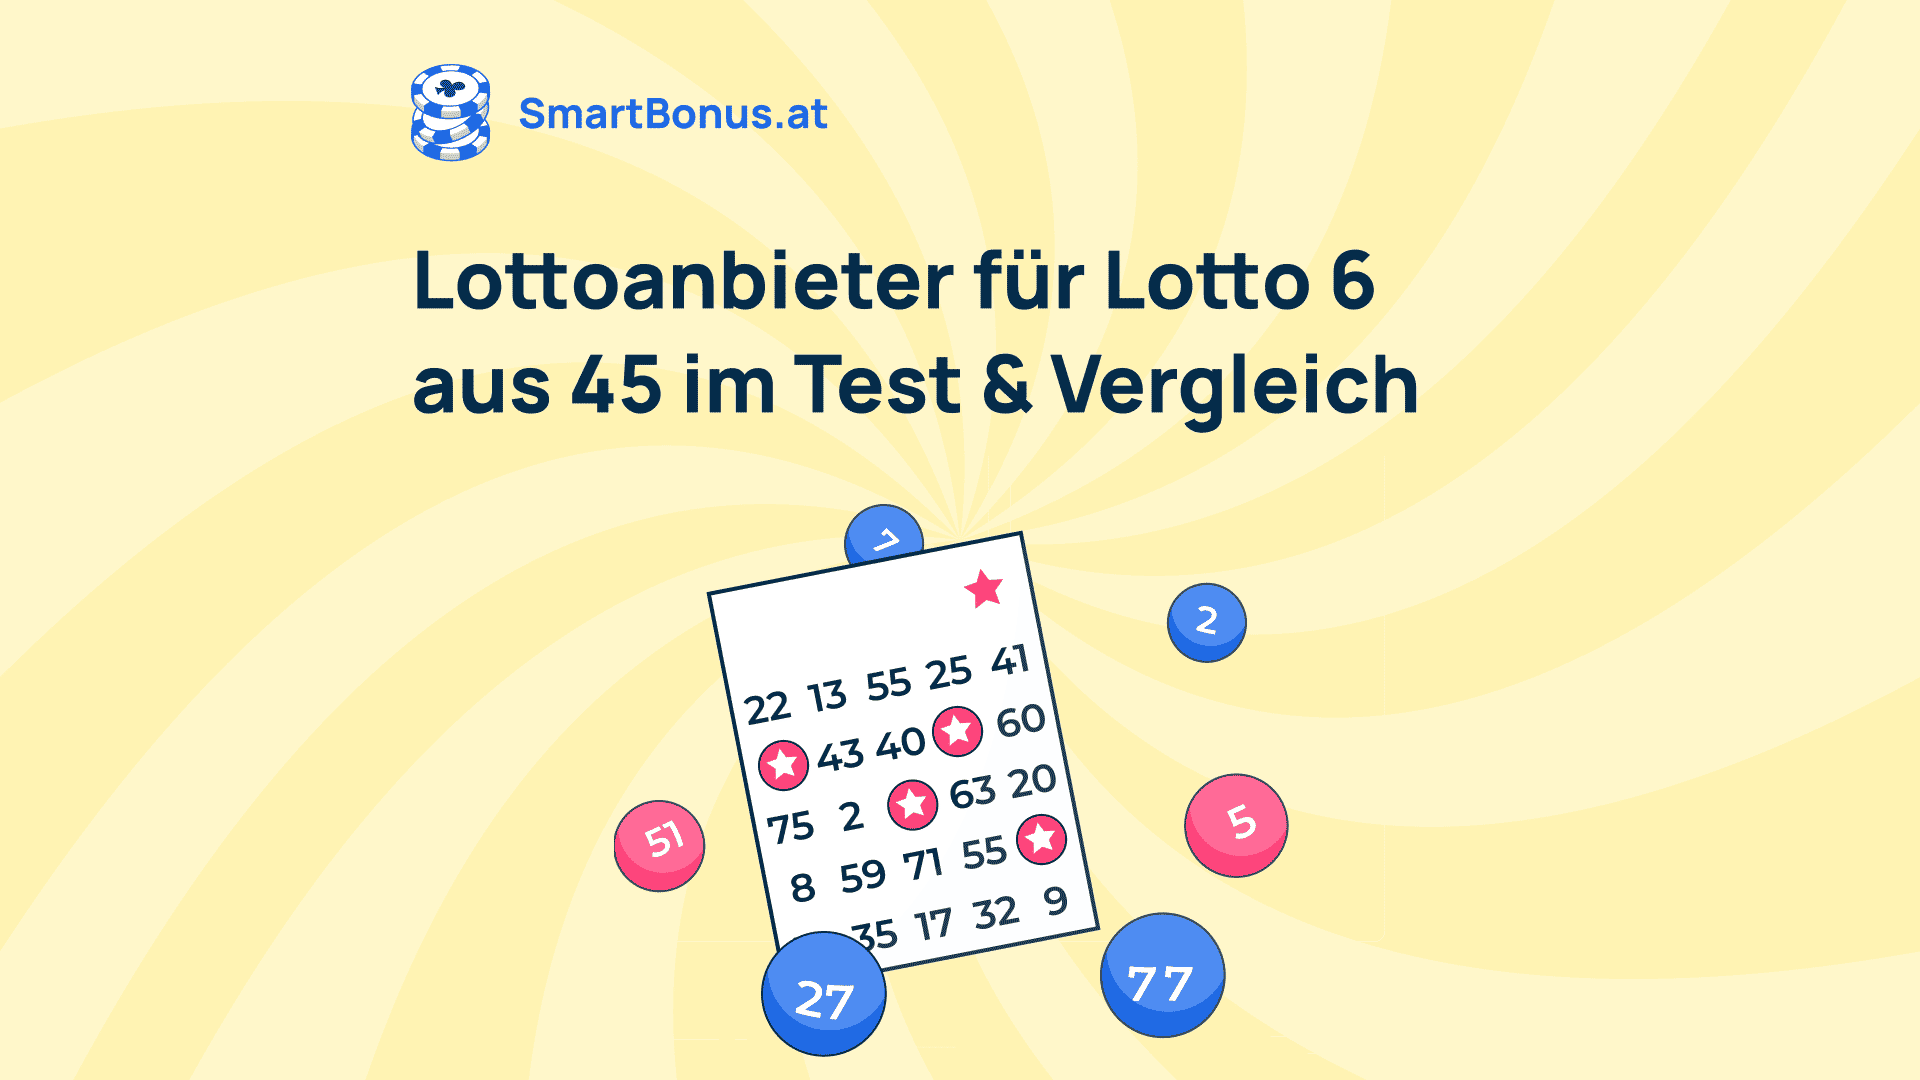 lottoanbieter for lotto 6